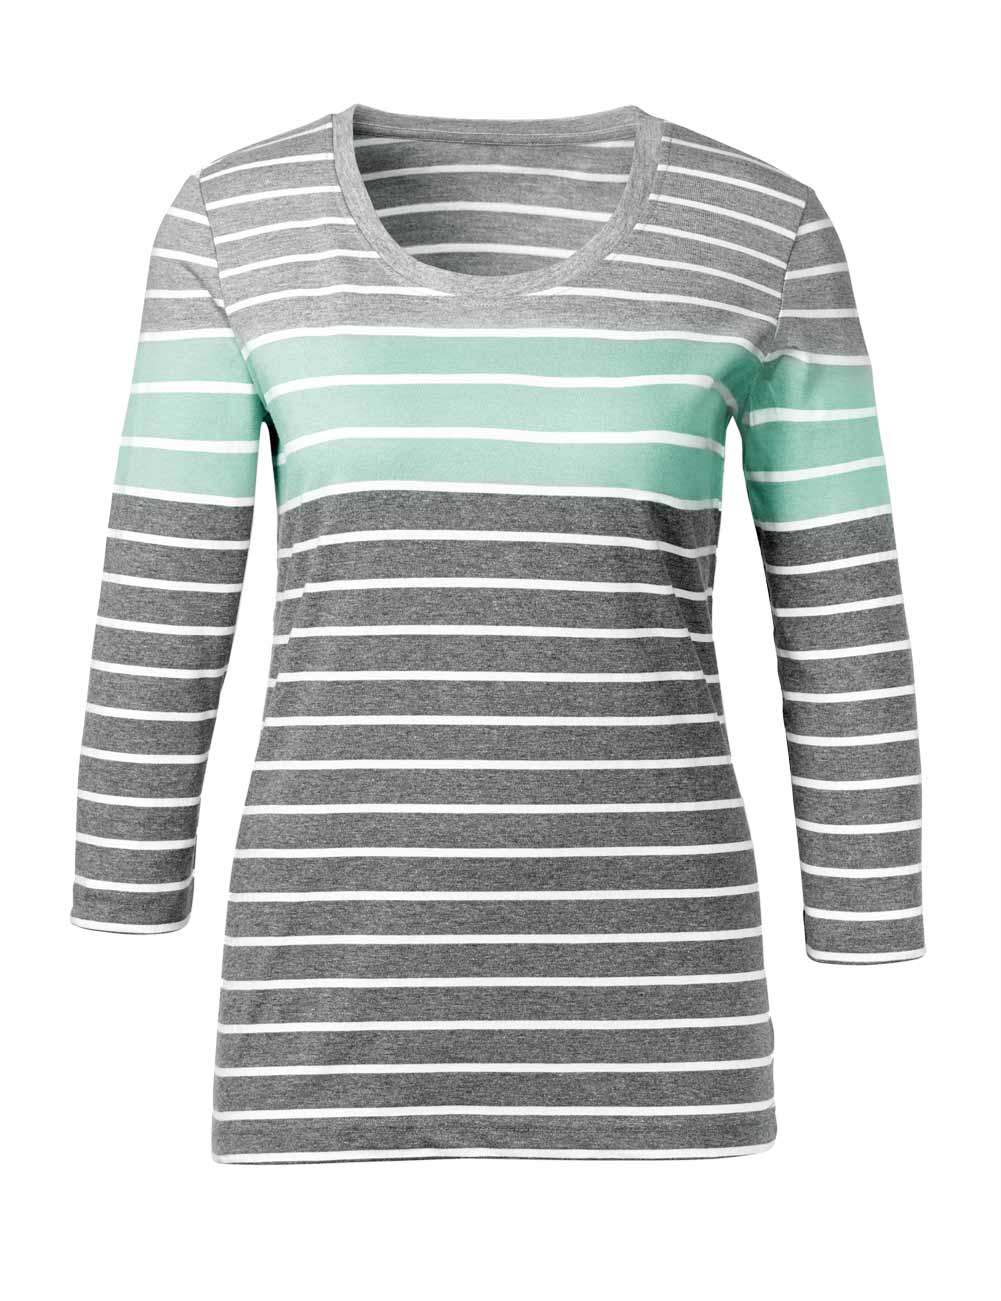 830.674 Création L Premium Damen Shirt langarm Streifenshirt Langarmshirt grau-mint